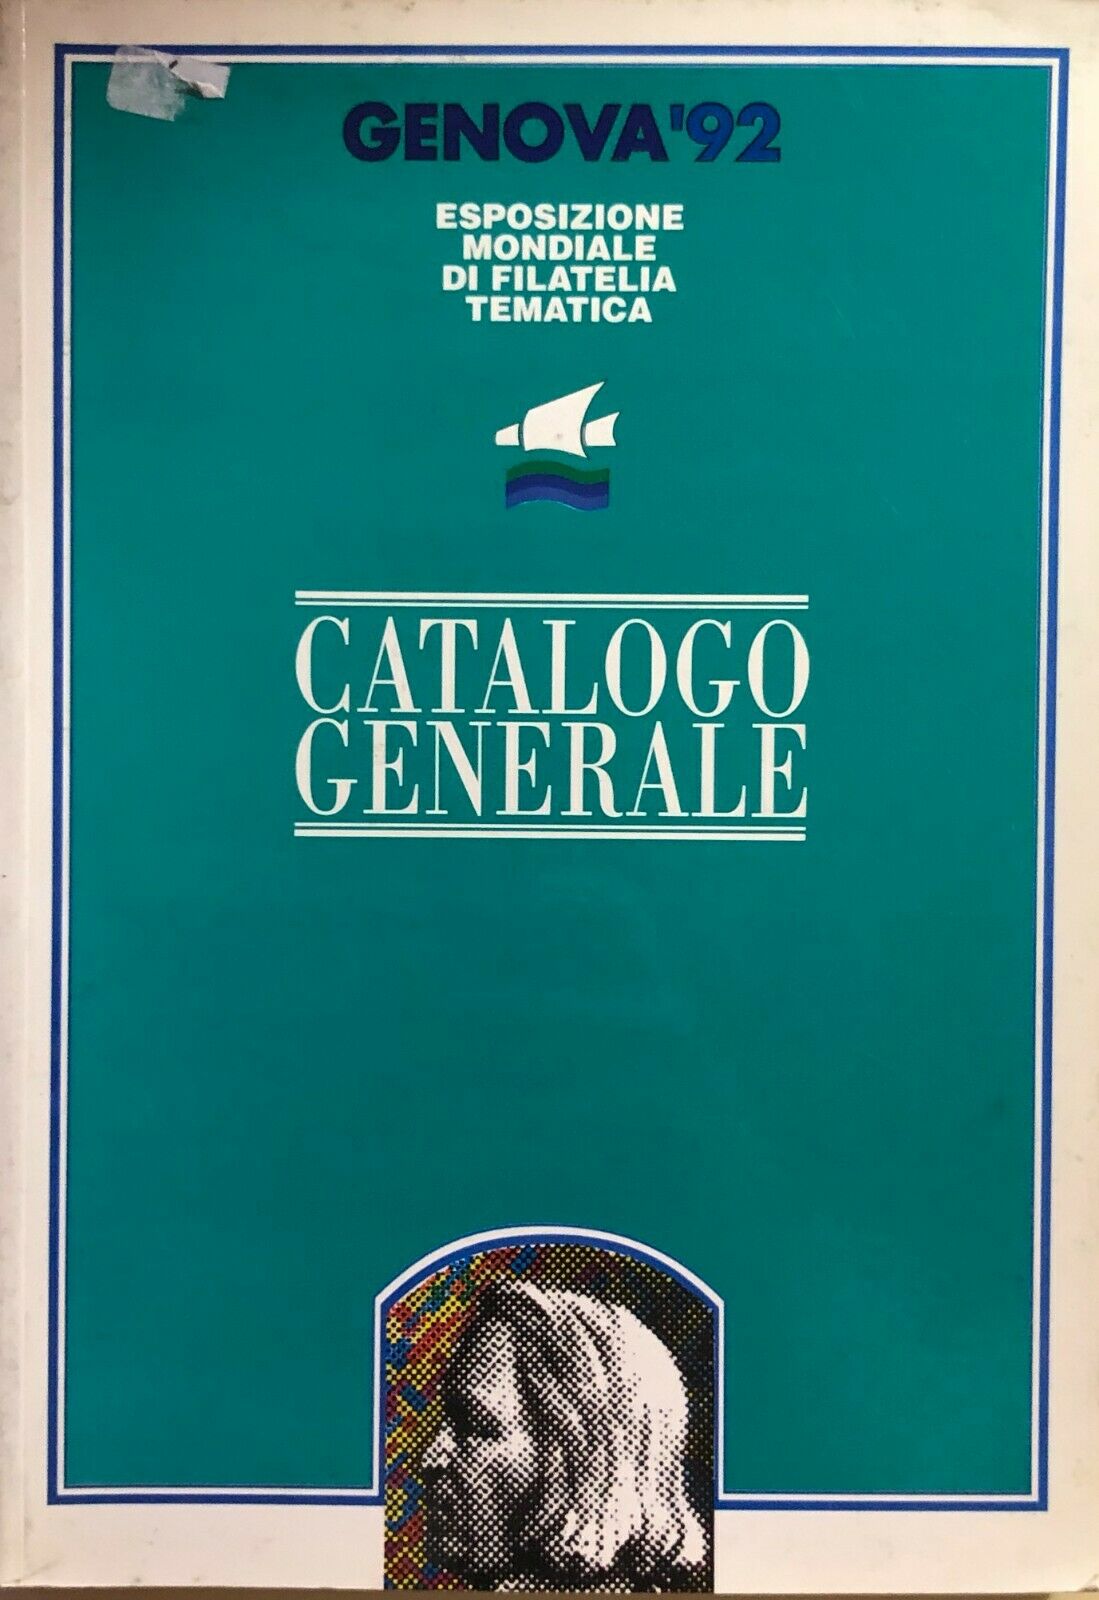 Catalogo generale Genova '92 (filatelia), 1992, EMFT